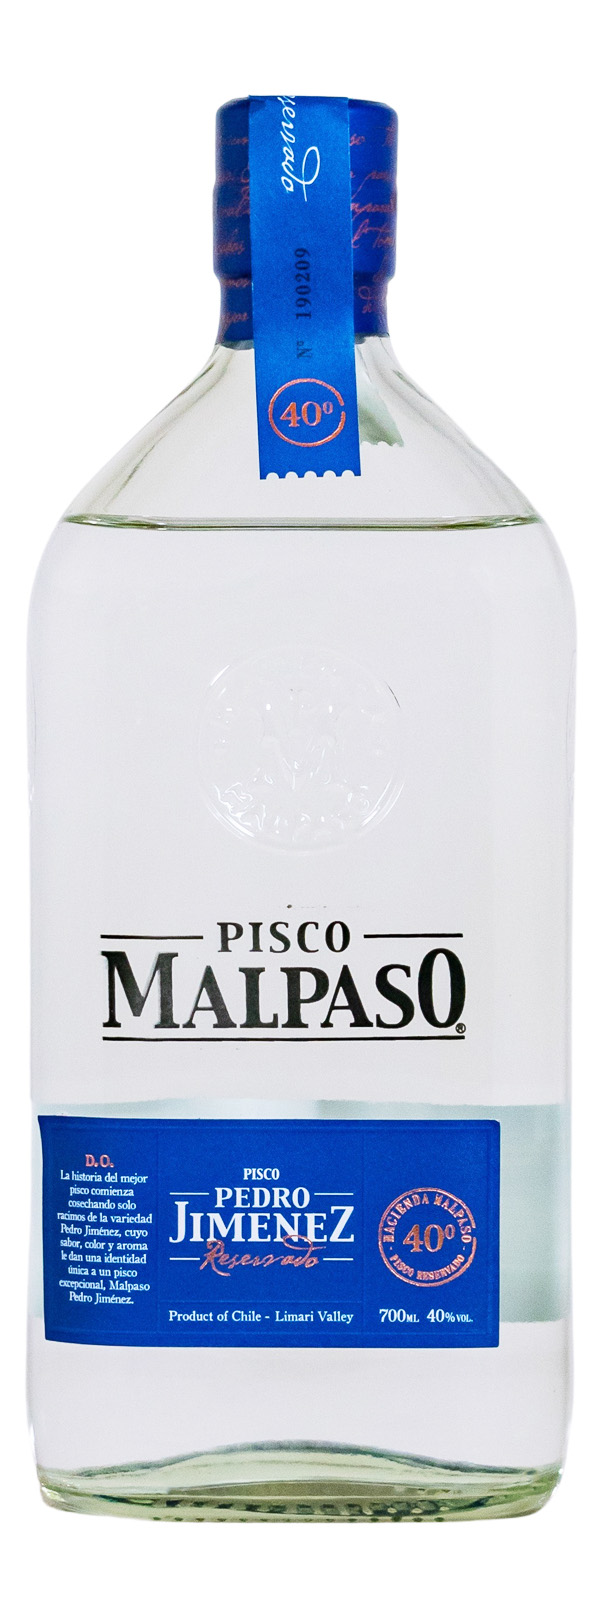 Pisco MalPaso Pedro Jimenez - 0,7L 40% vol